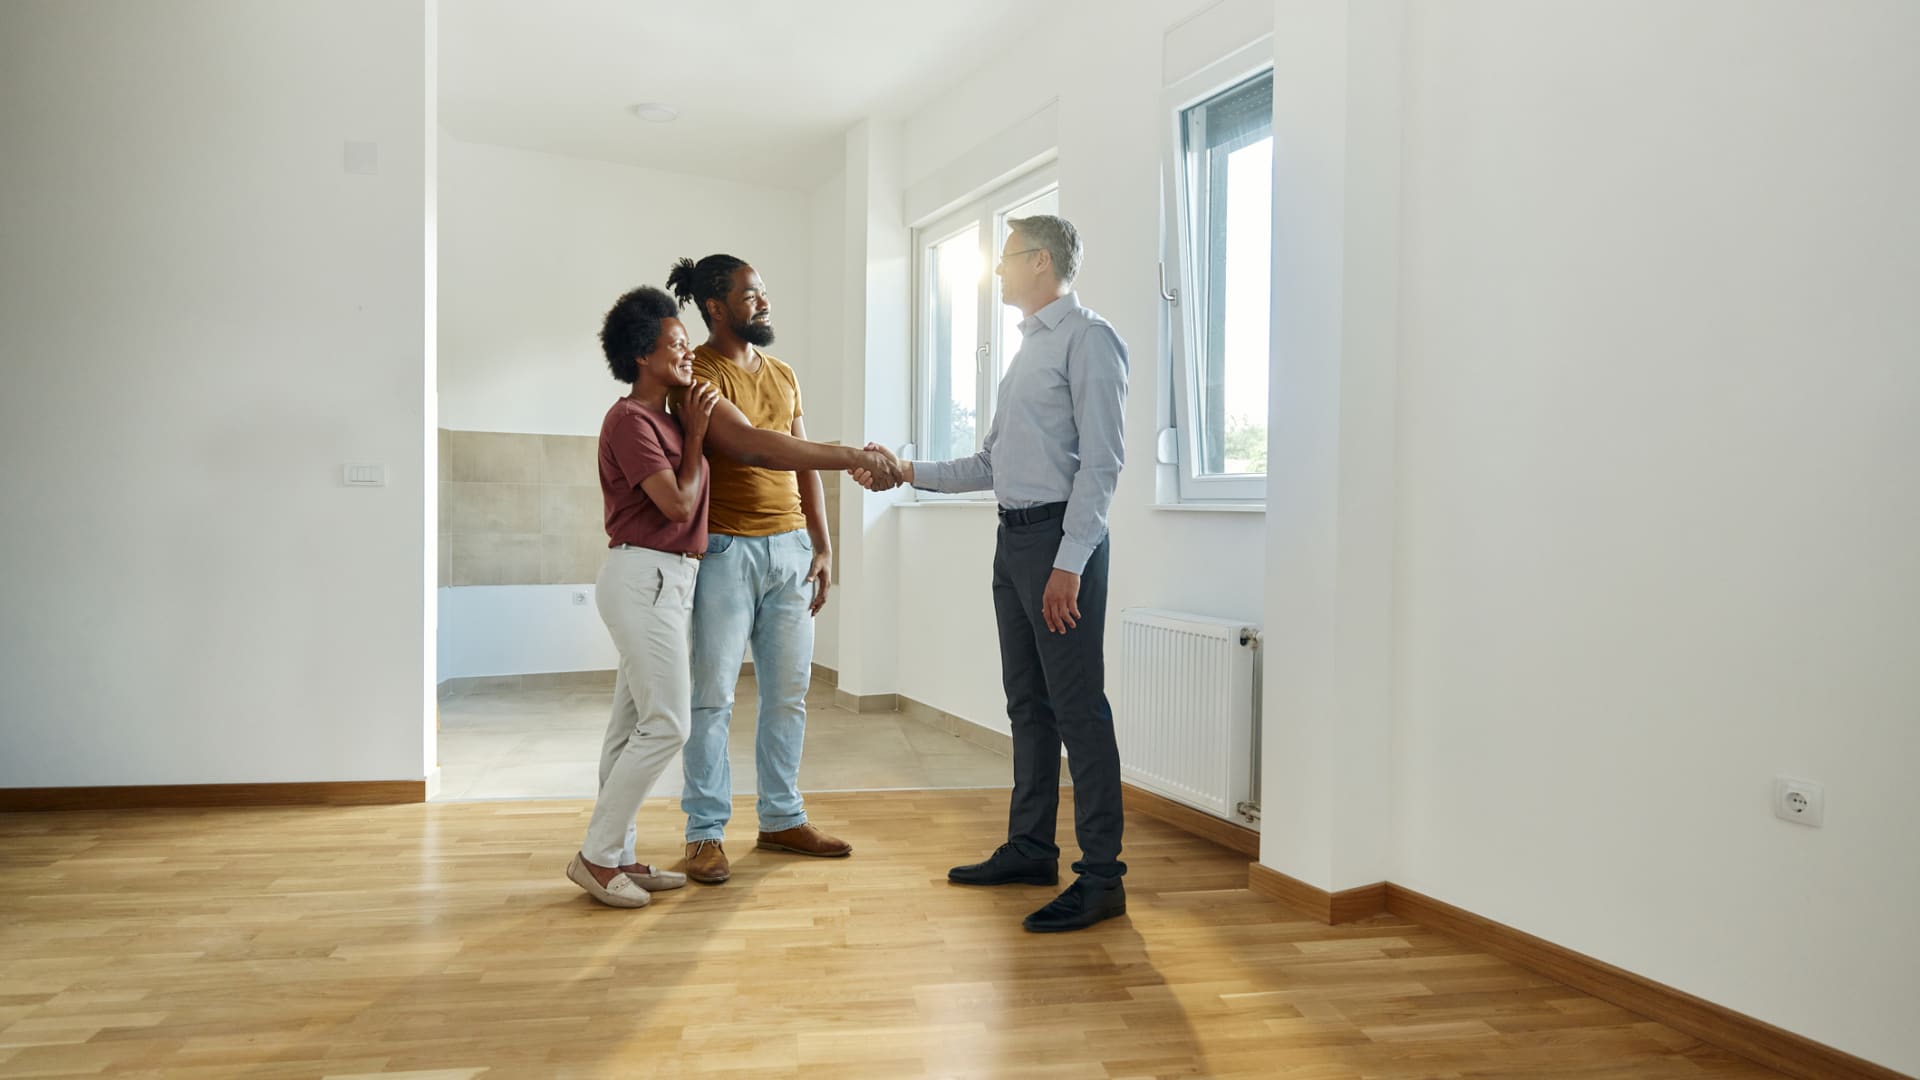 Black Americans still face 'disproportionately steep hurdles' to homeownership, expert says